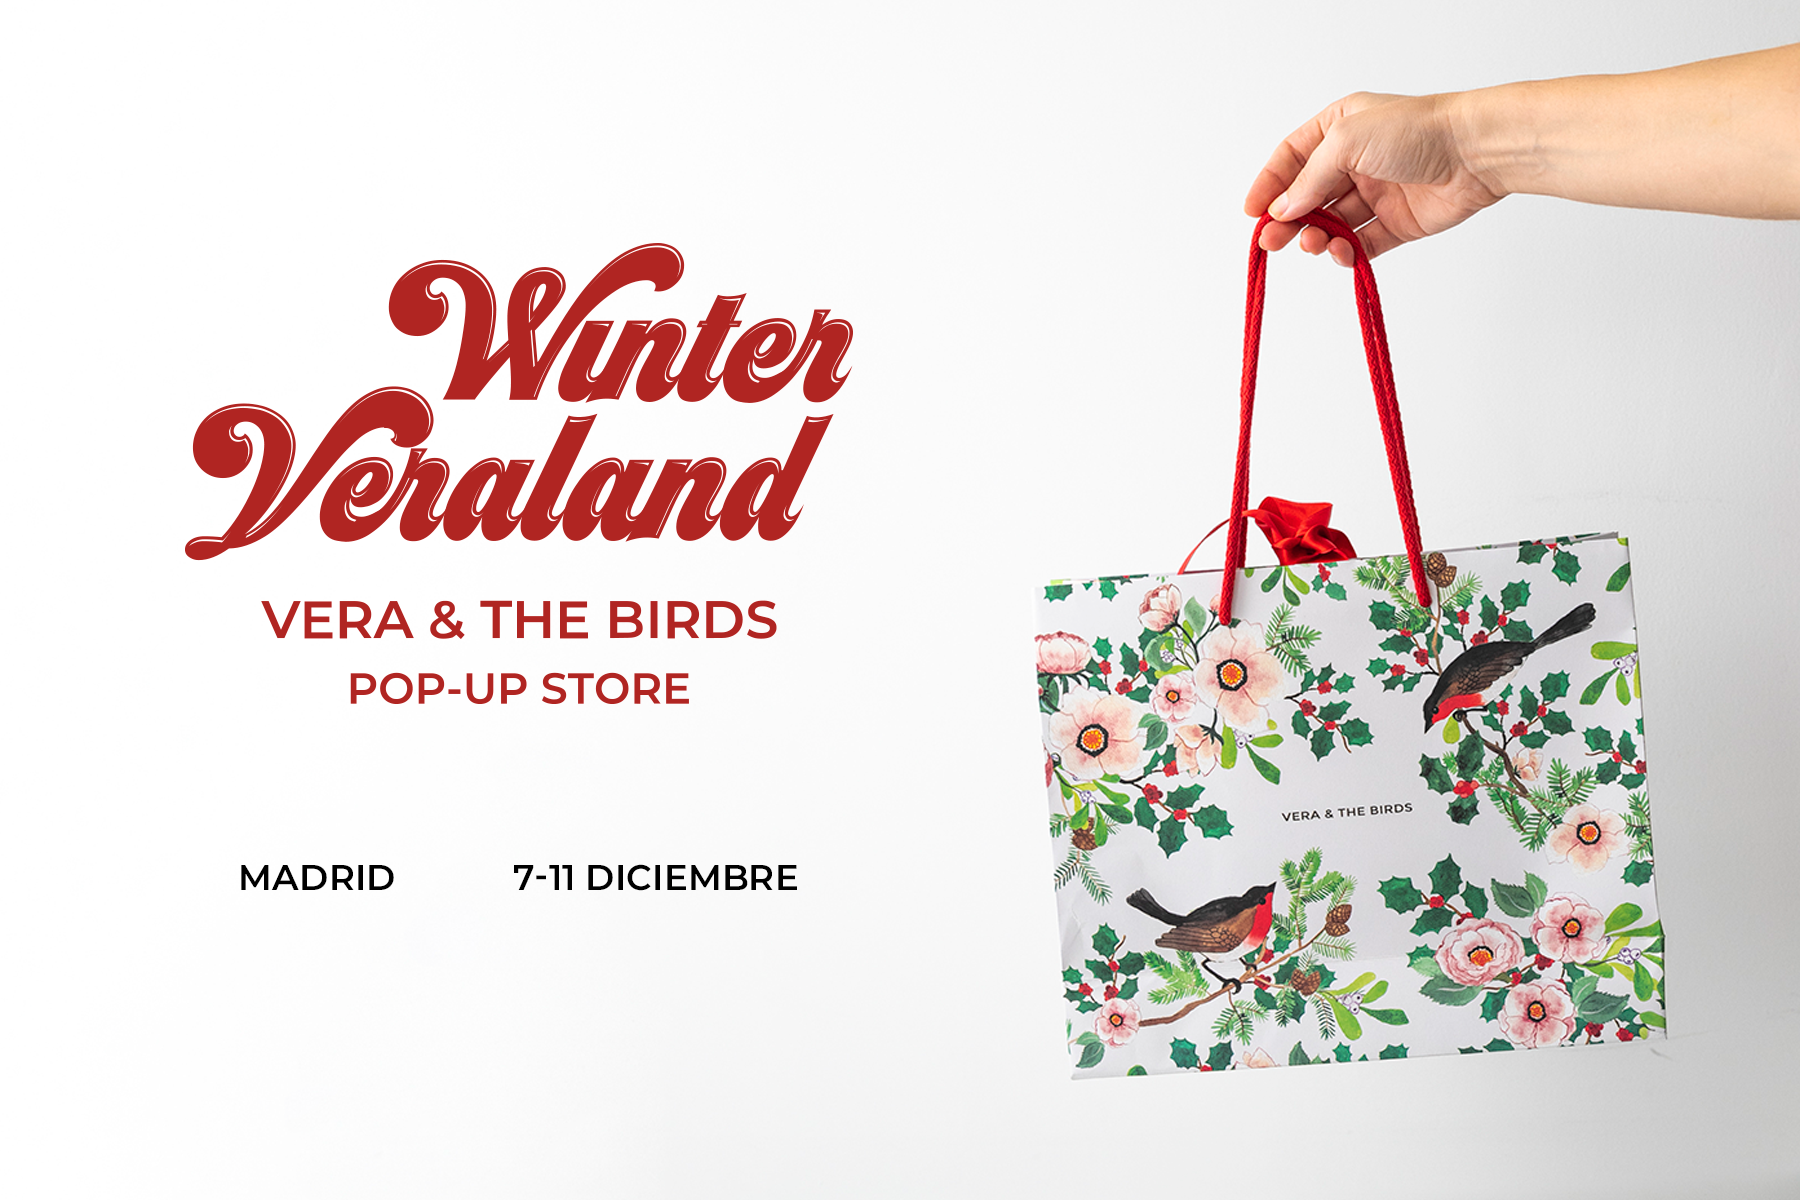 Winter Veraland, nuestra primera tienda Pop up navideña